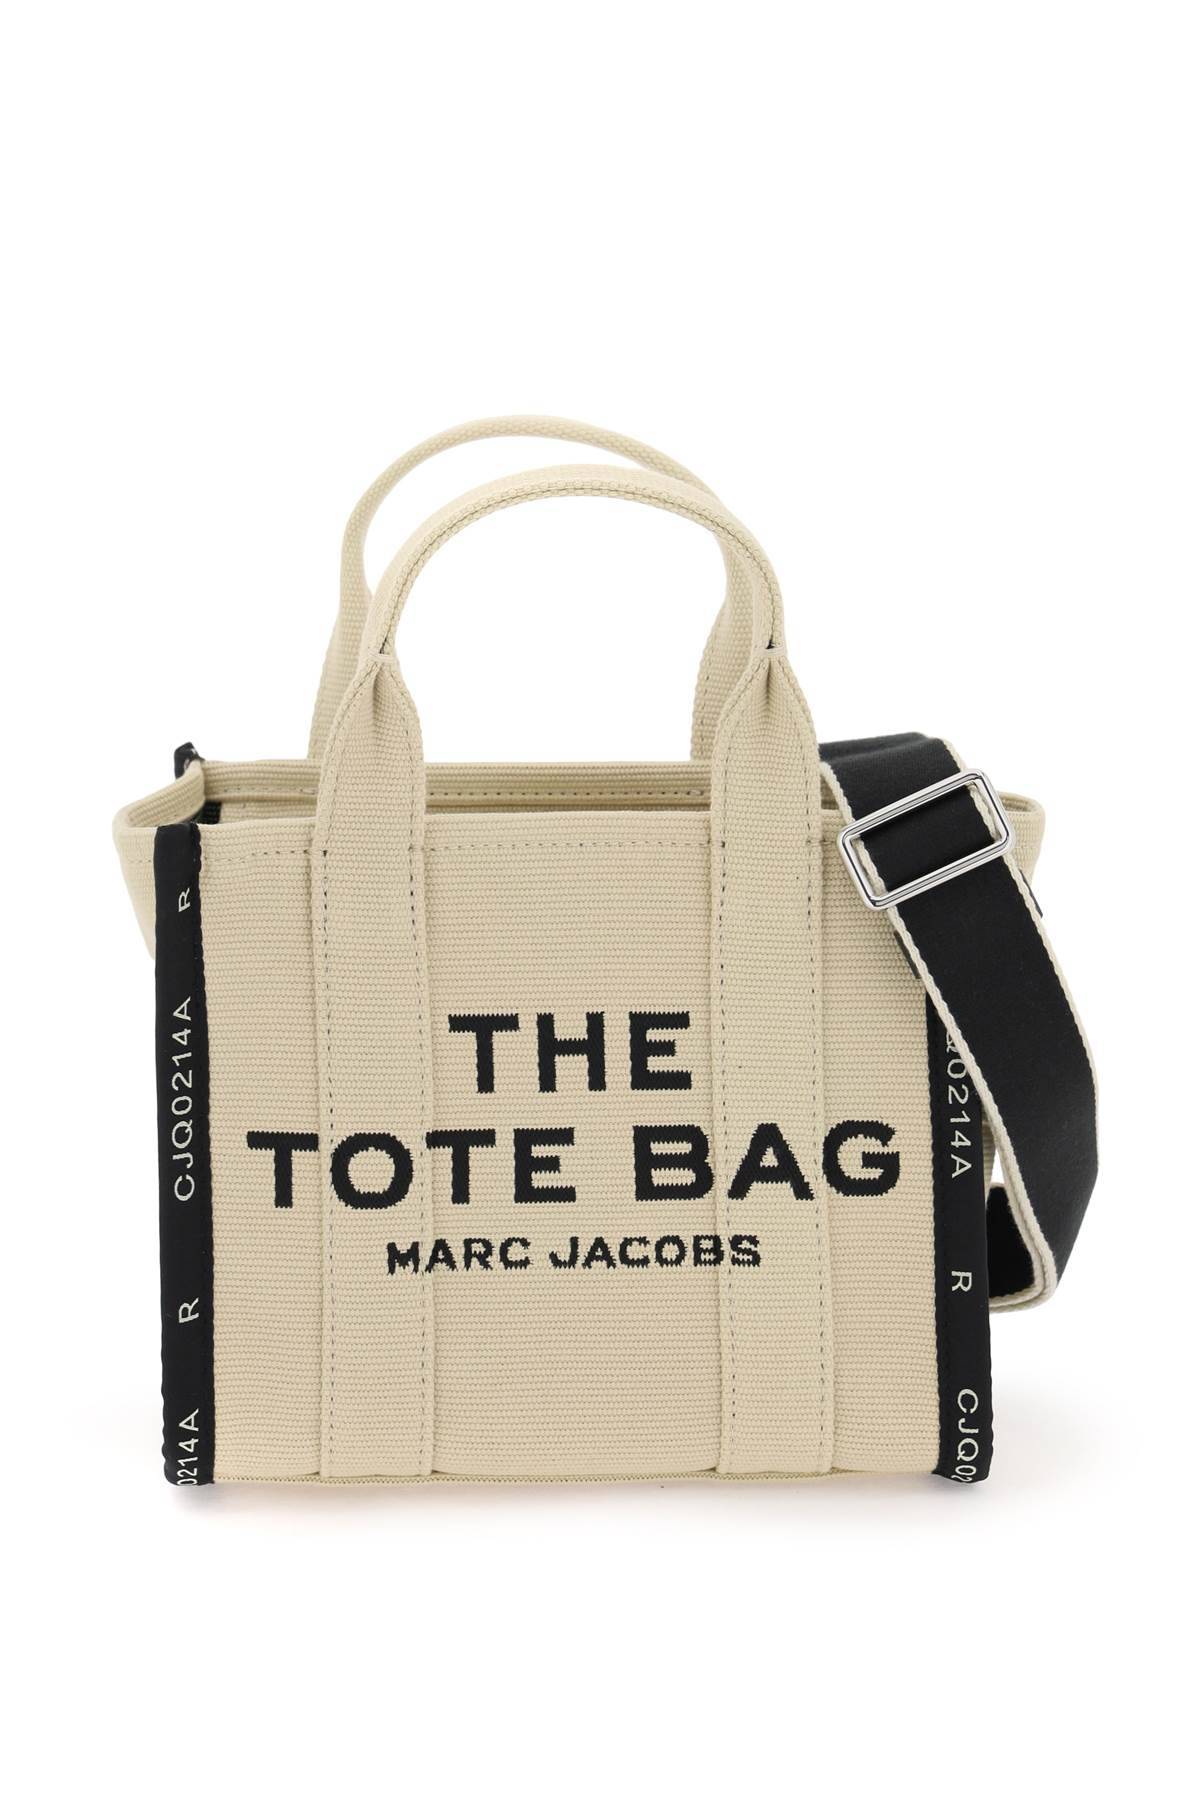 Marc Jacobs MARC JACOBS the jacquard small bag